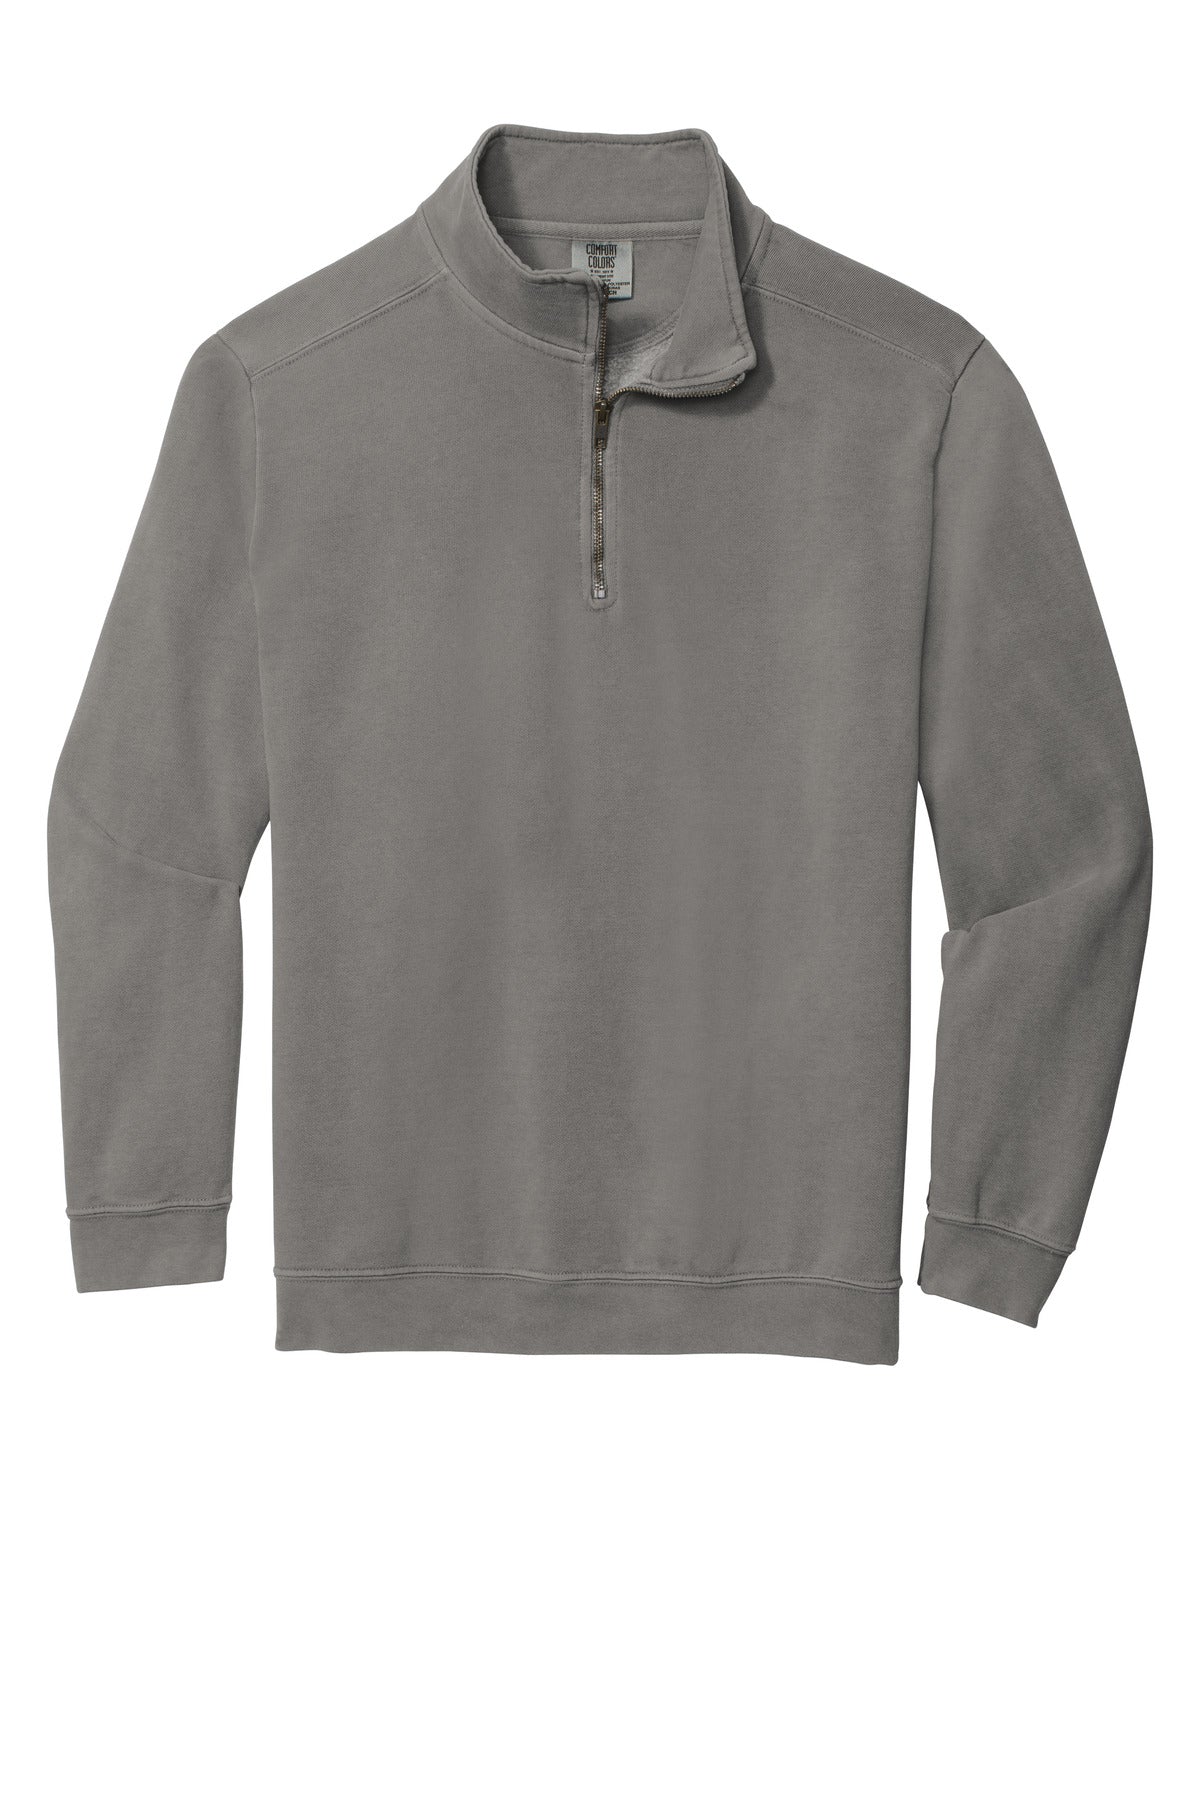 COMFORT COLORS Ring Spun 1/4-Zip Sweatshirt. 1580 - BT Imprintables Shirts